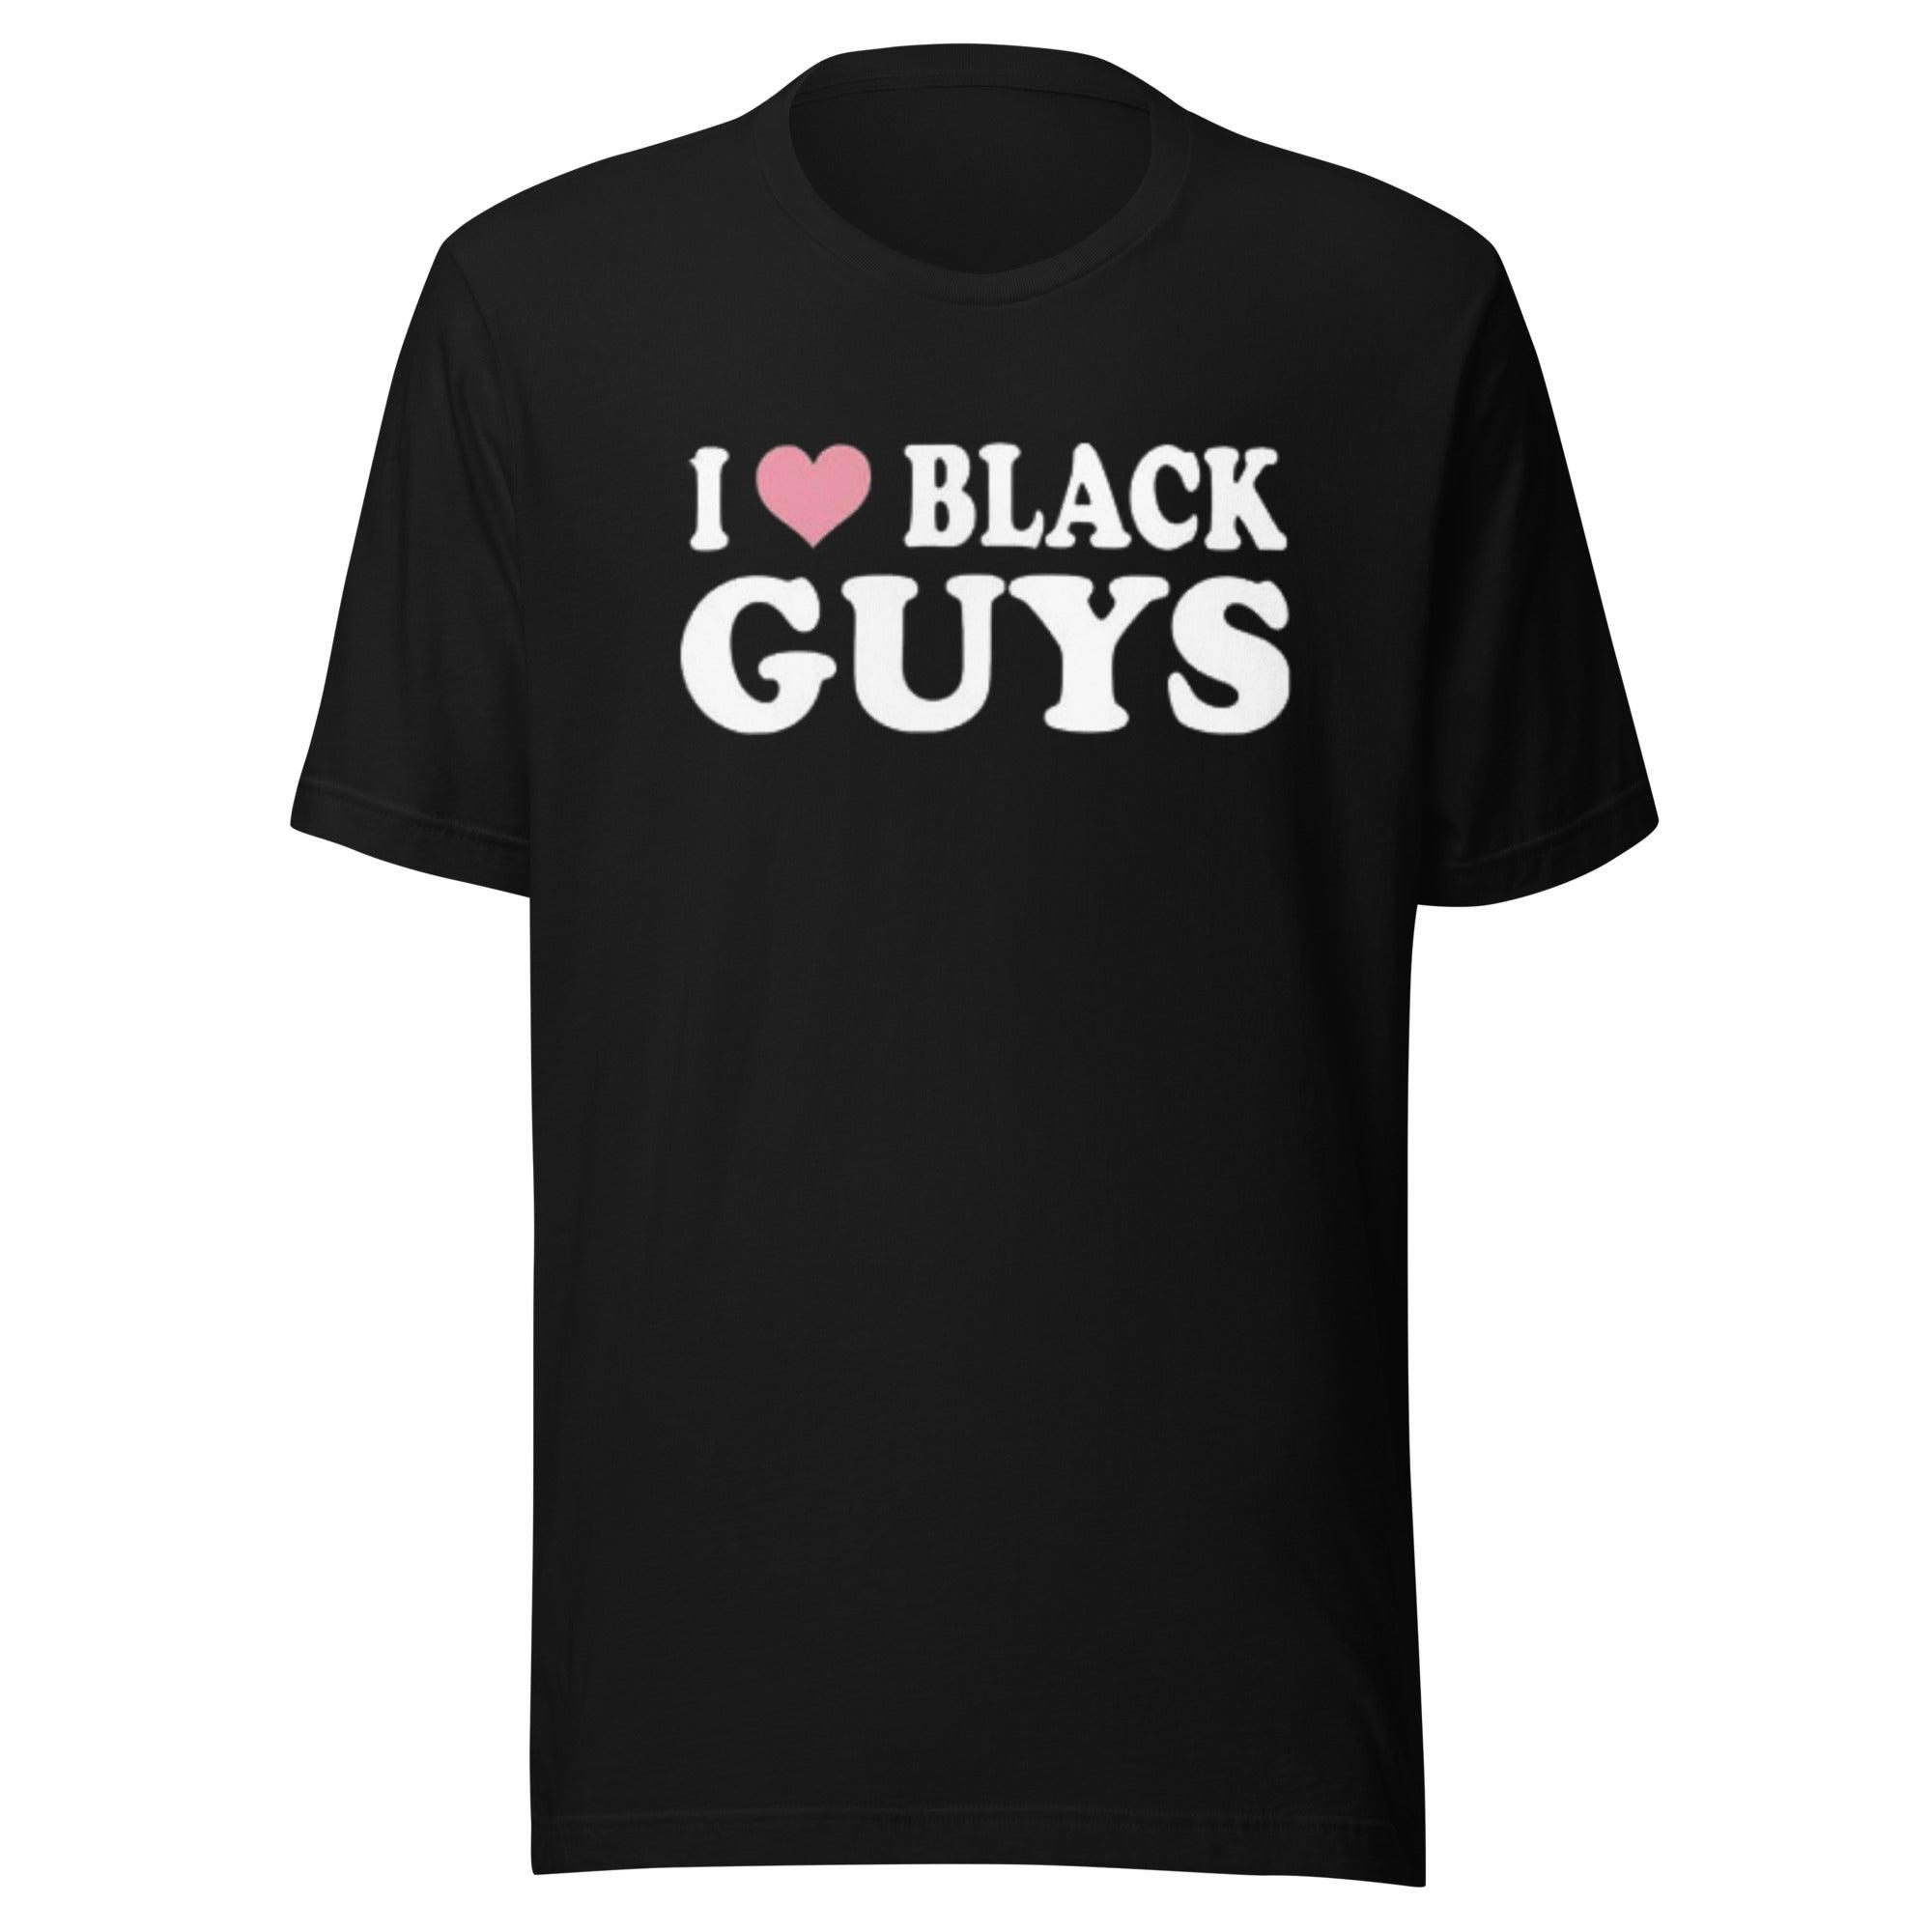 I Love Black Guys T-shirt Ultra Soft Cotton Unisex Short Sleeve Crew Neck Top - TopKoalaTee